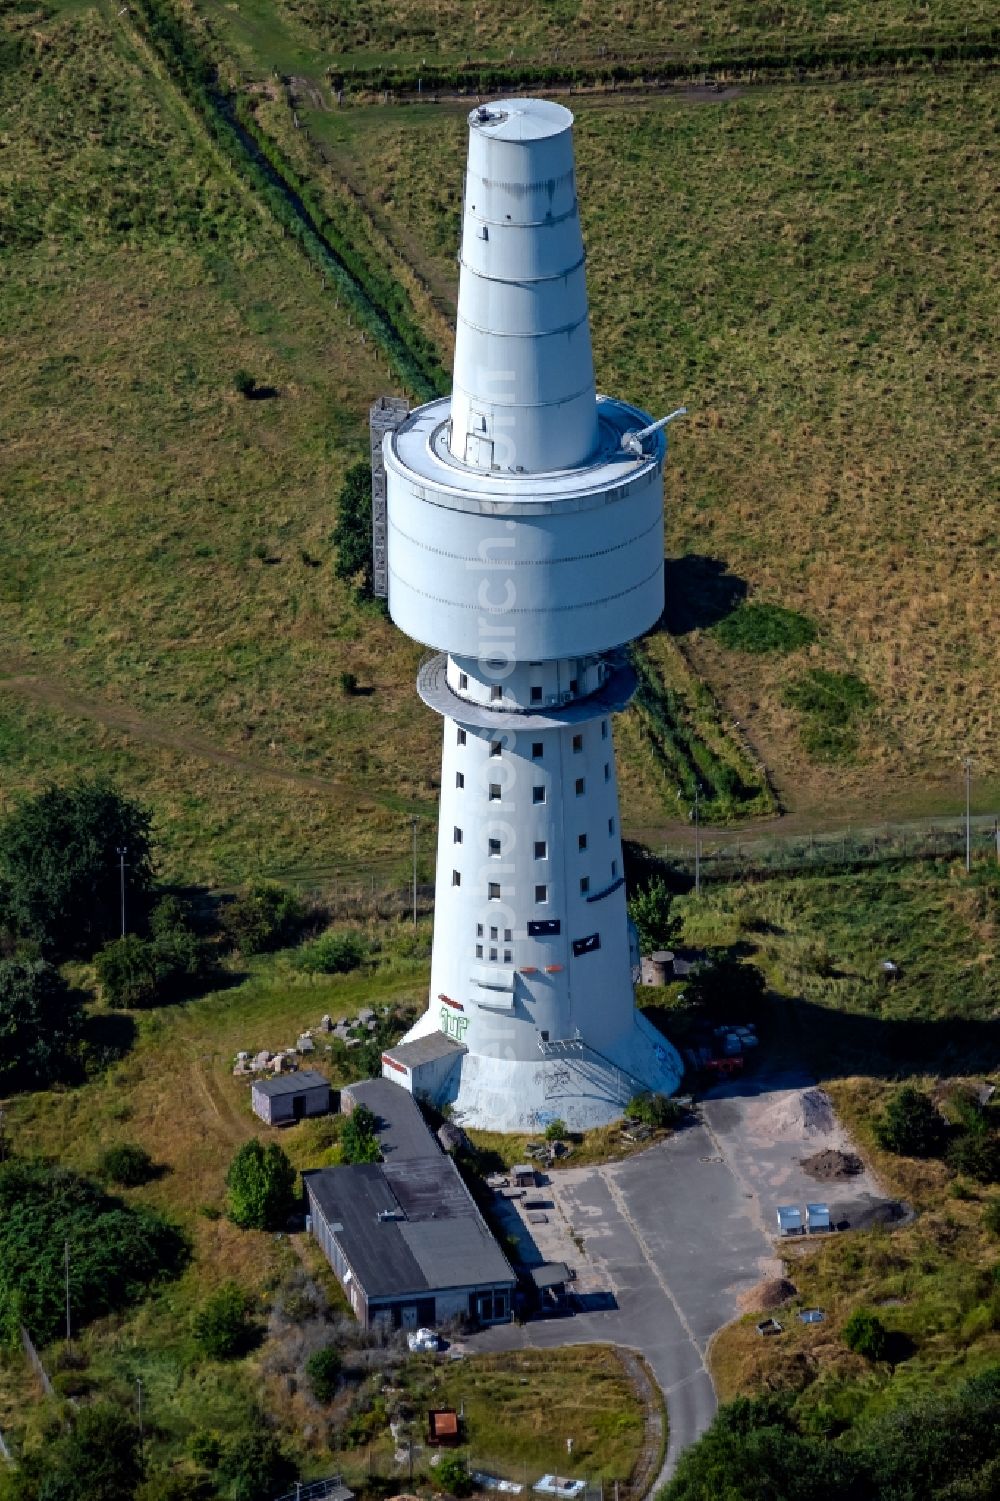 Pelzerhaken from the bird's eye view: Television Tower Ehemaliger Fernmeldeturm M of Marinefernmeldesektors 73 Pelzerhaken in Pelzerhaken in the state Schleswig-Holstein, Germany